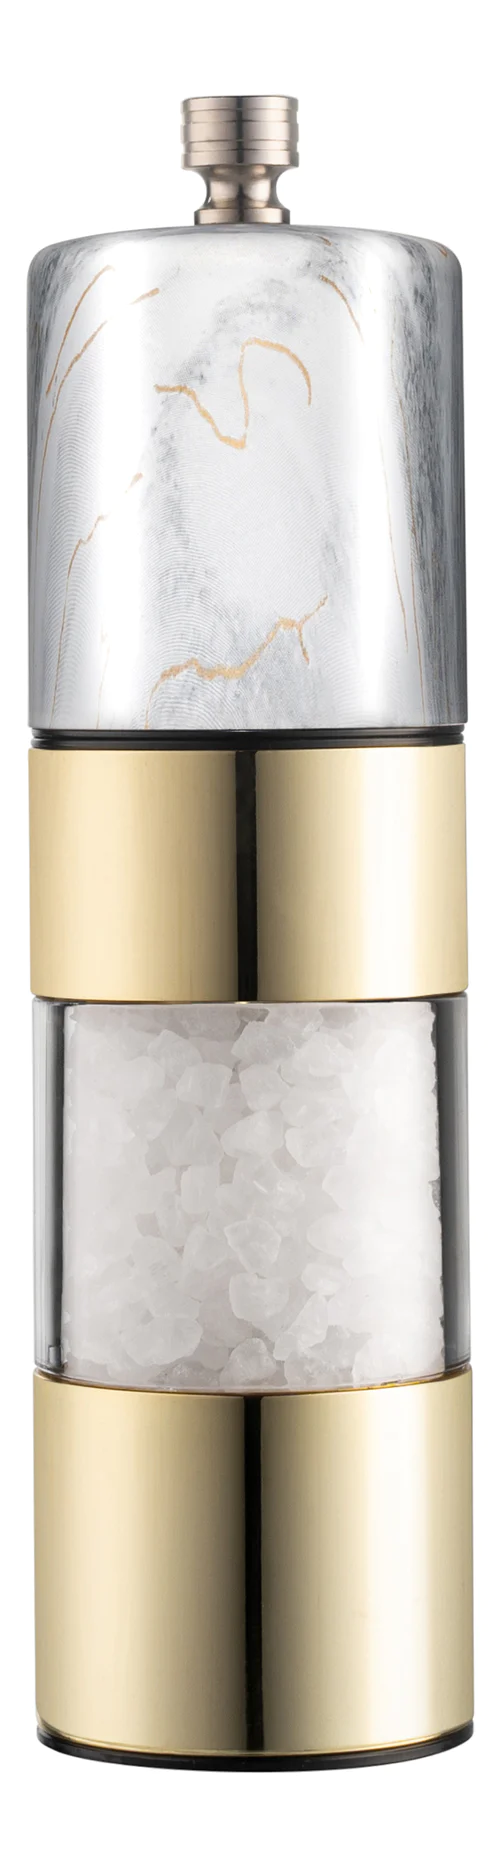 GCP Products Automatic Gravity Electric Salt Pepper Grinder Led Set  Adjustable Coarseness Us